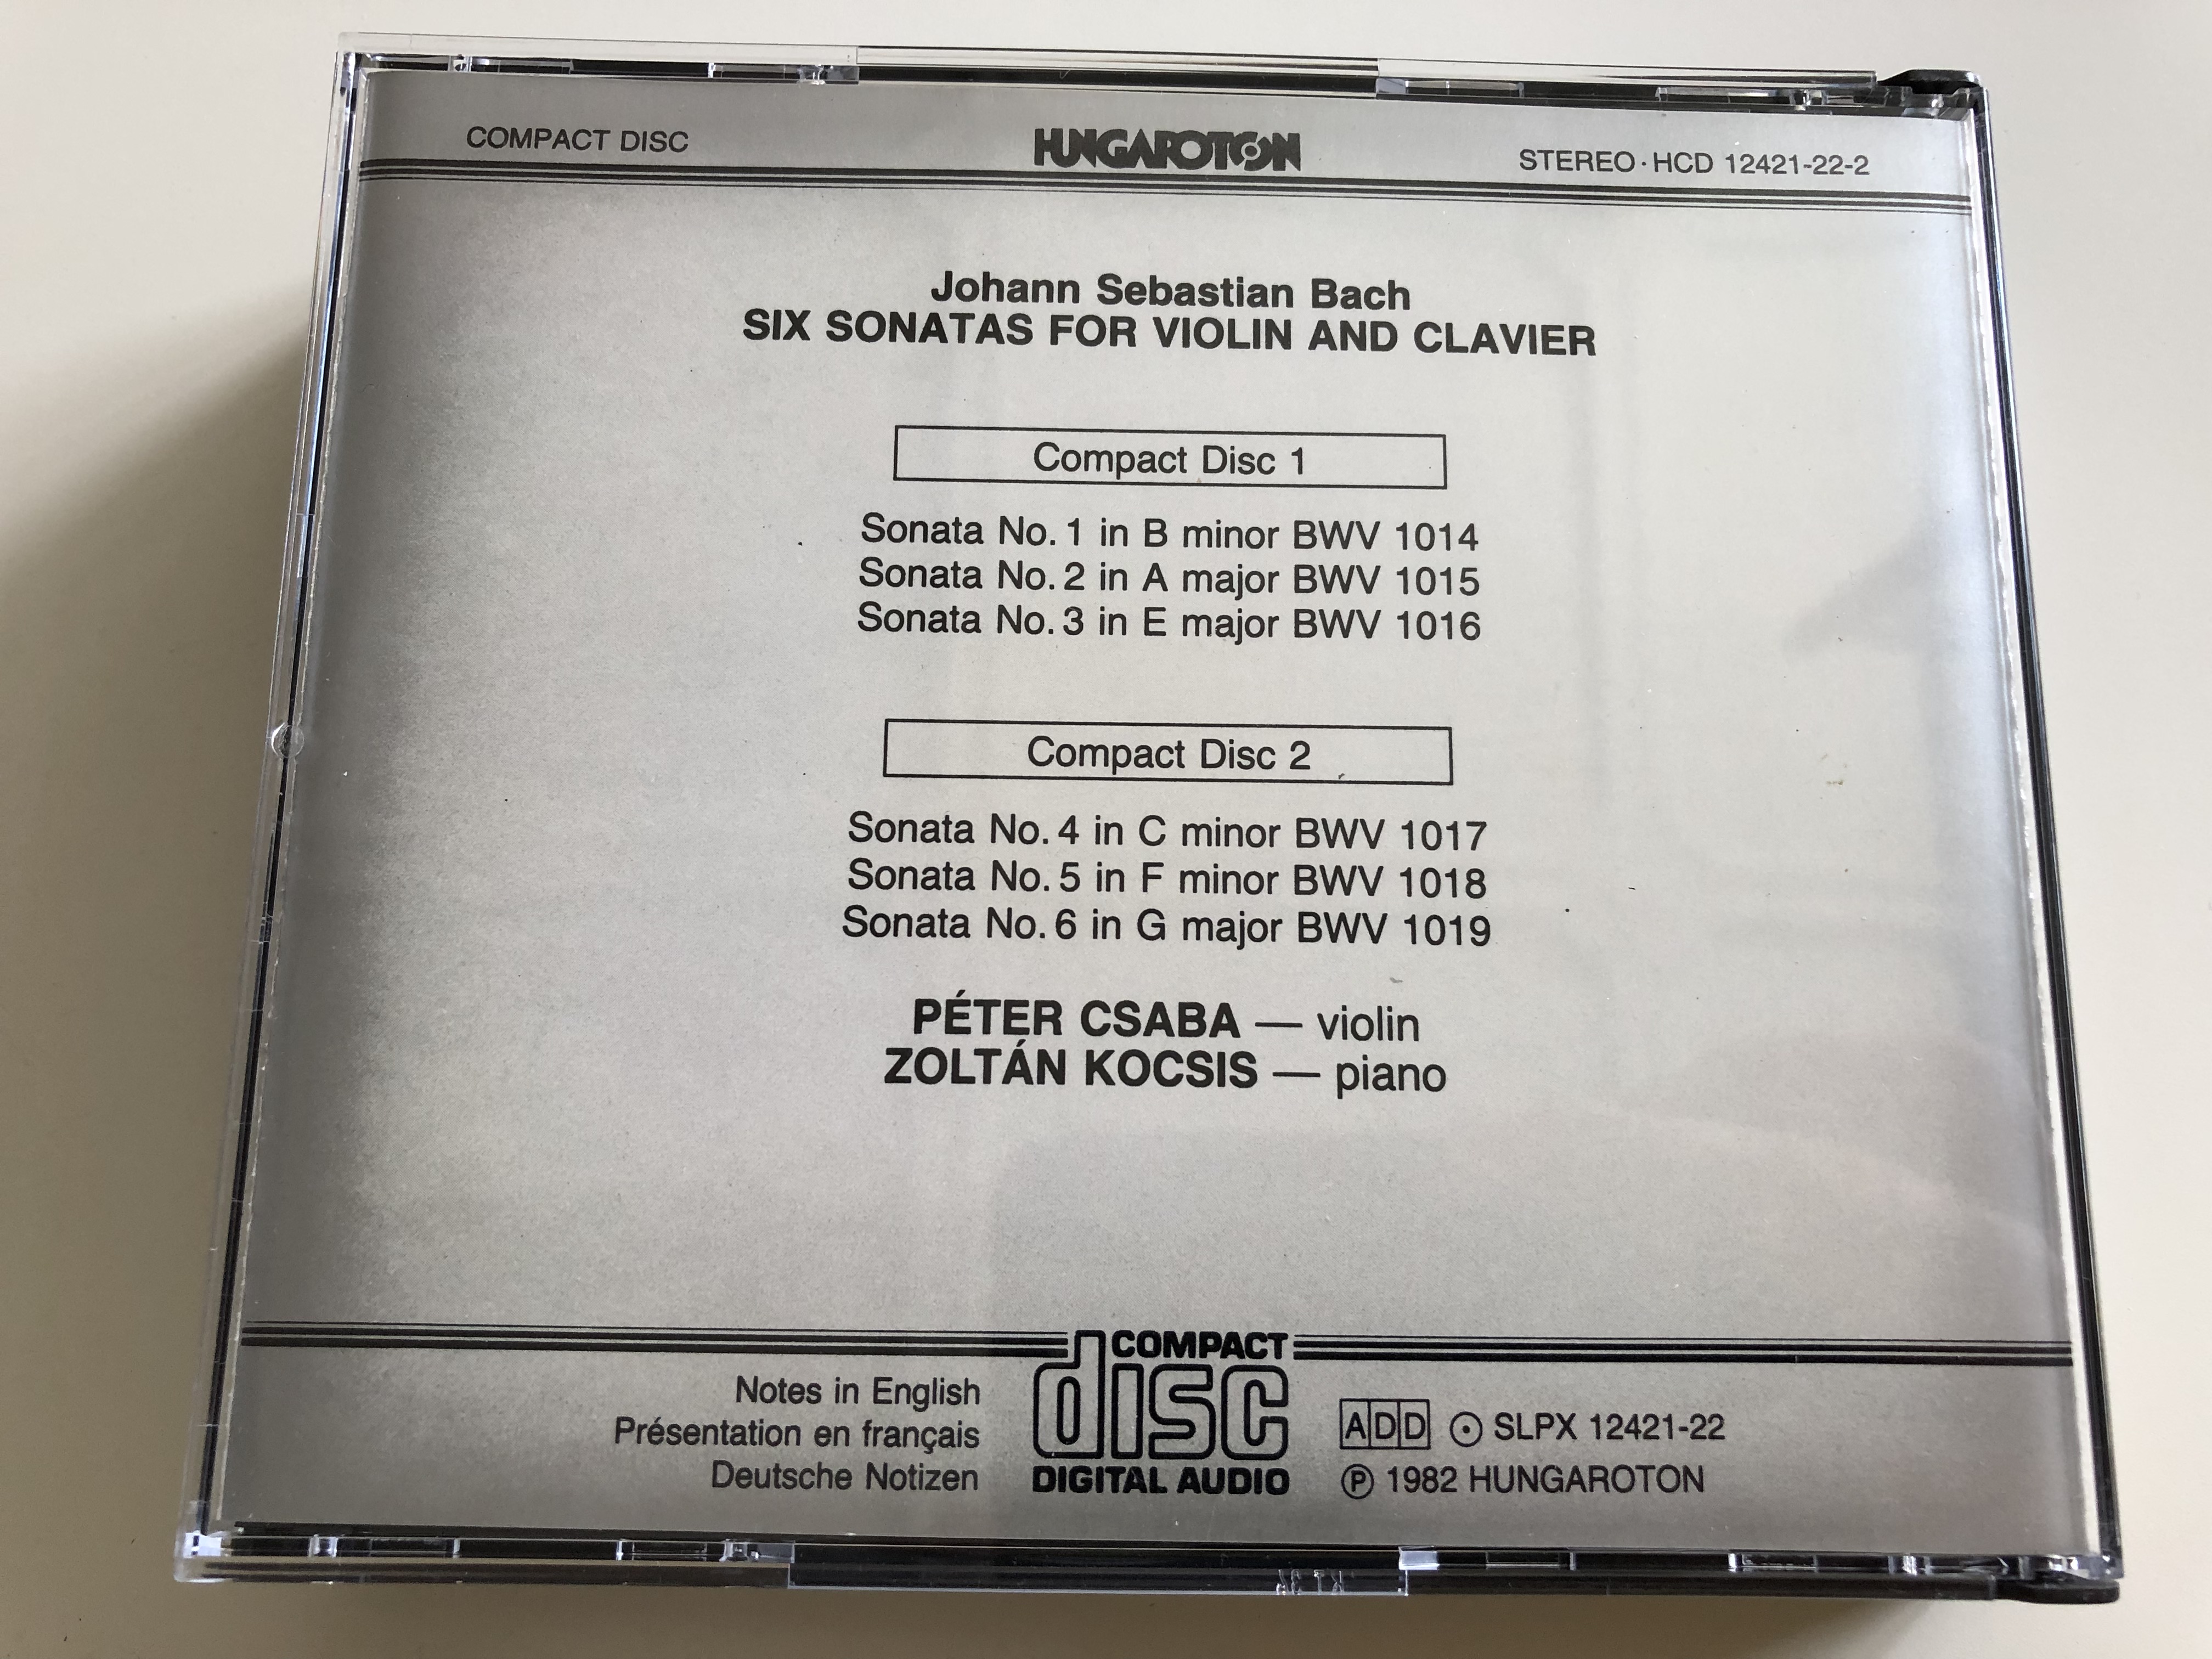 johann-sebastian-bach-sonatas-for-violin-clavier-2x-audio-cd-p-ter-csaba-violin-zolt-n-kocsis-piano-hungaroton-hcd-12421-22-2-4-.jpg